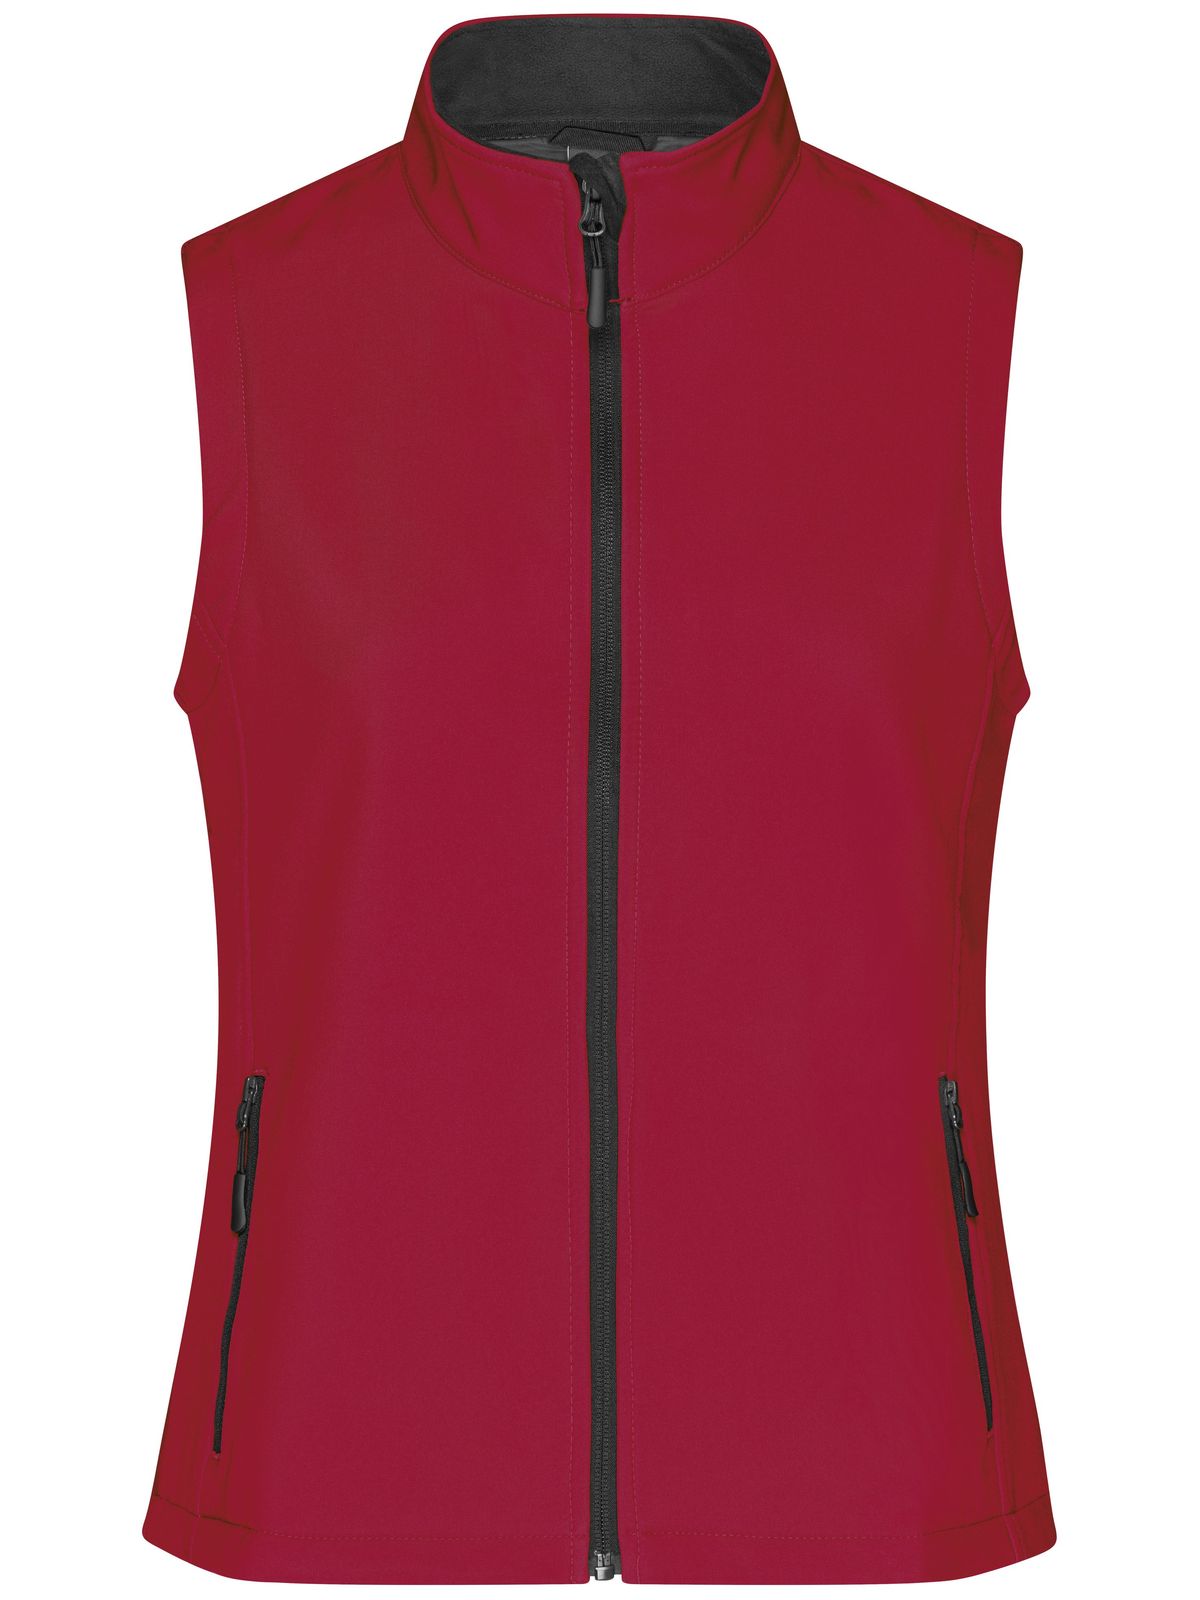 ladies-promo-softshell-vest-red-black.webp